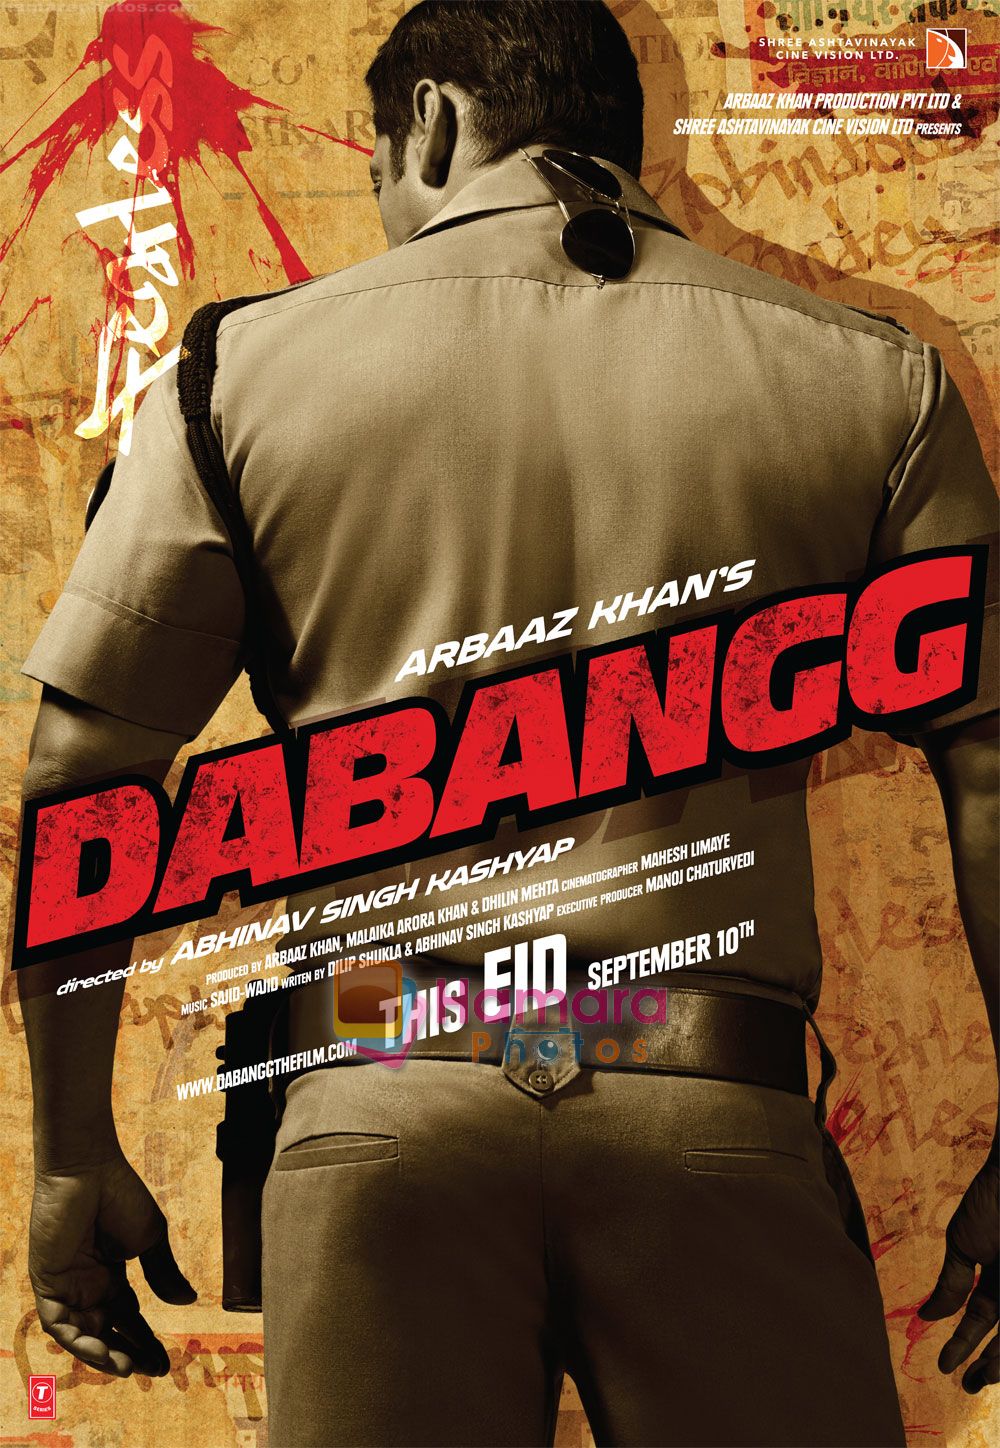 Salman Khan in the still from movie Dabangg  